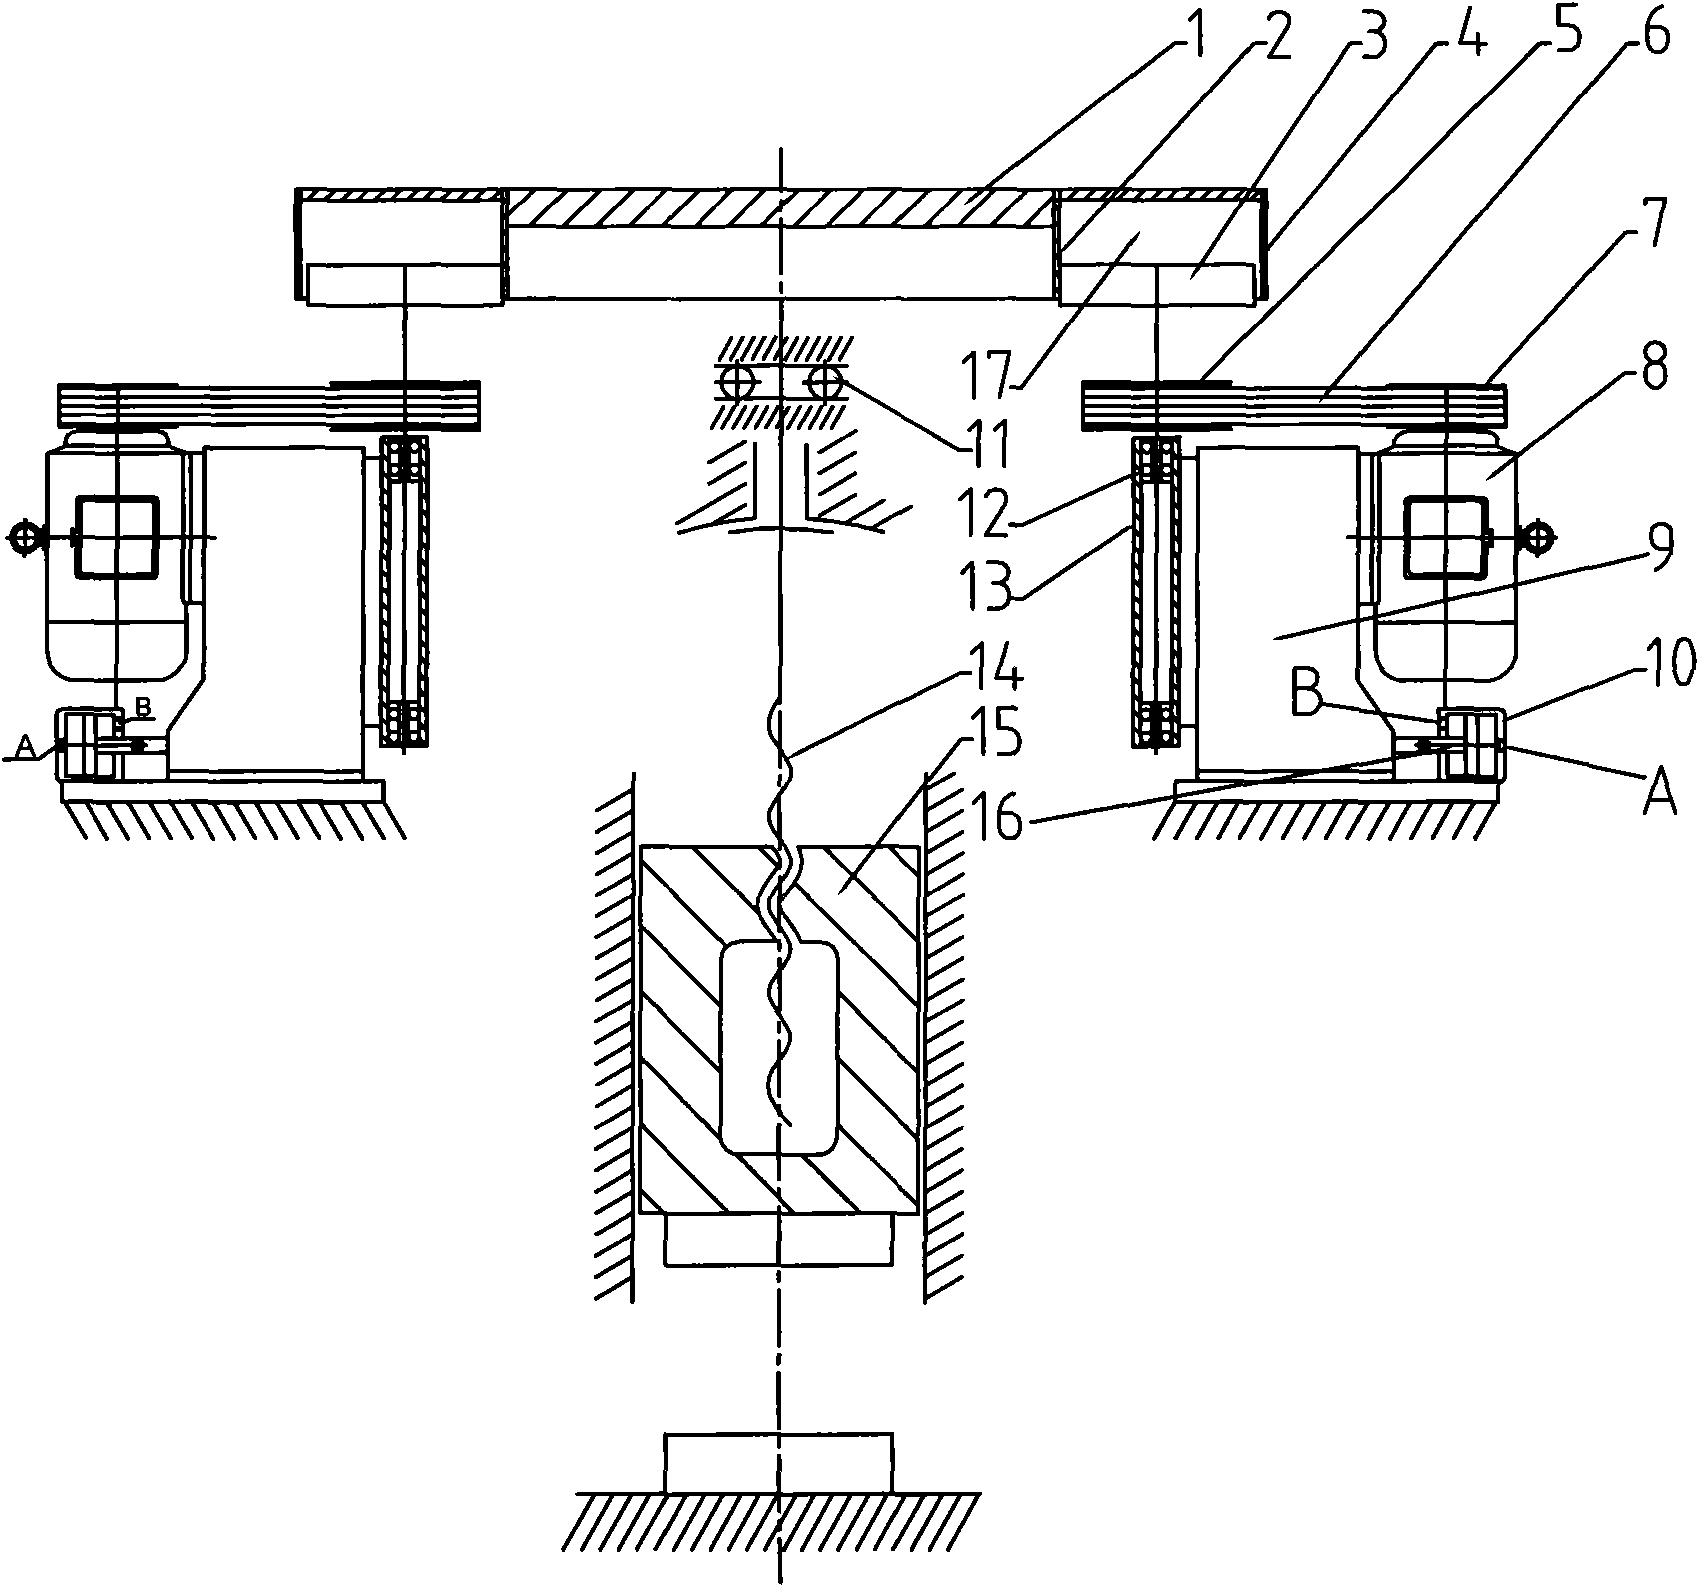 Drum-type friction screw press